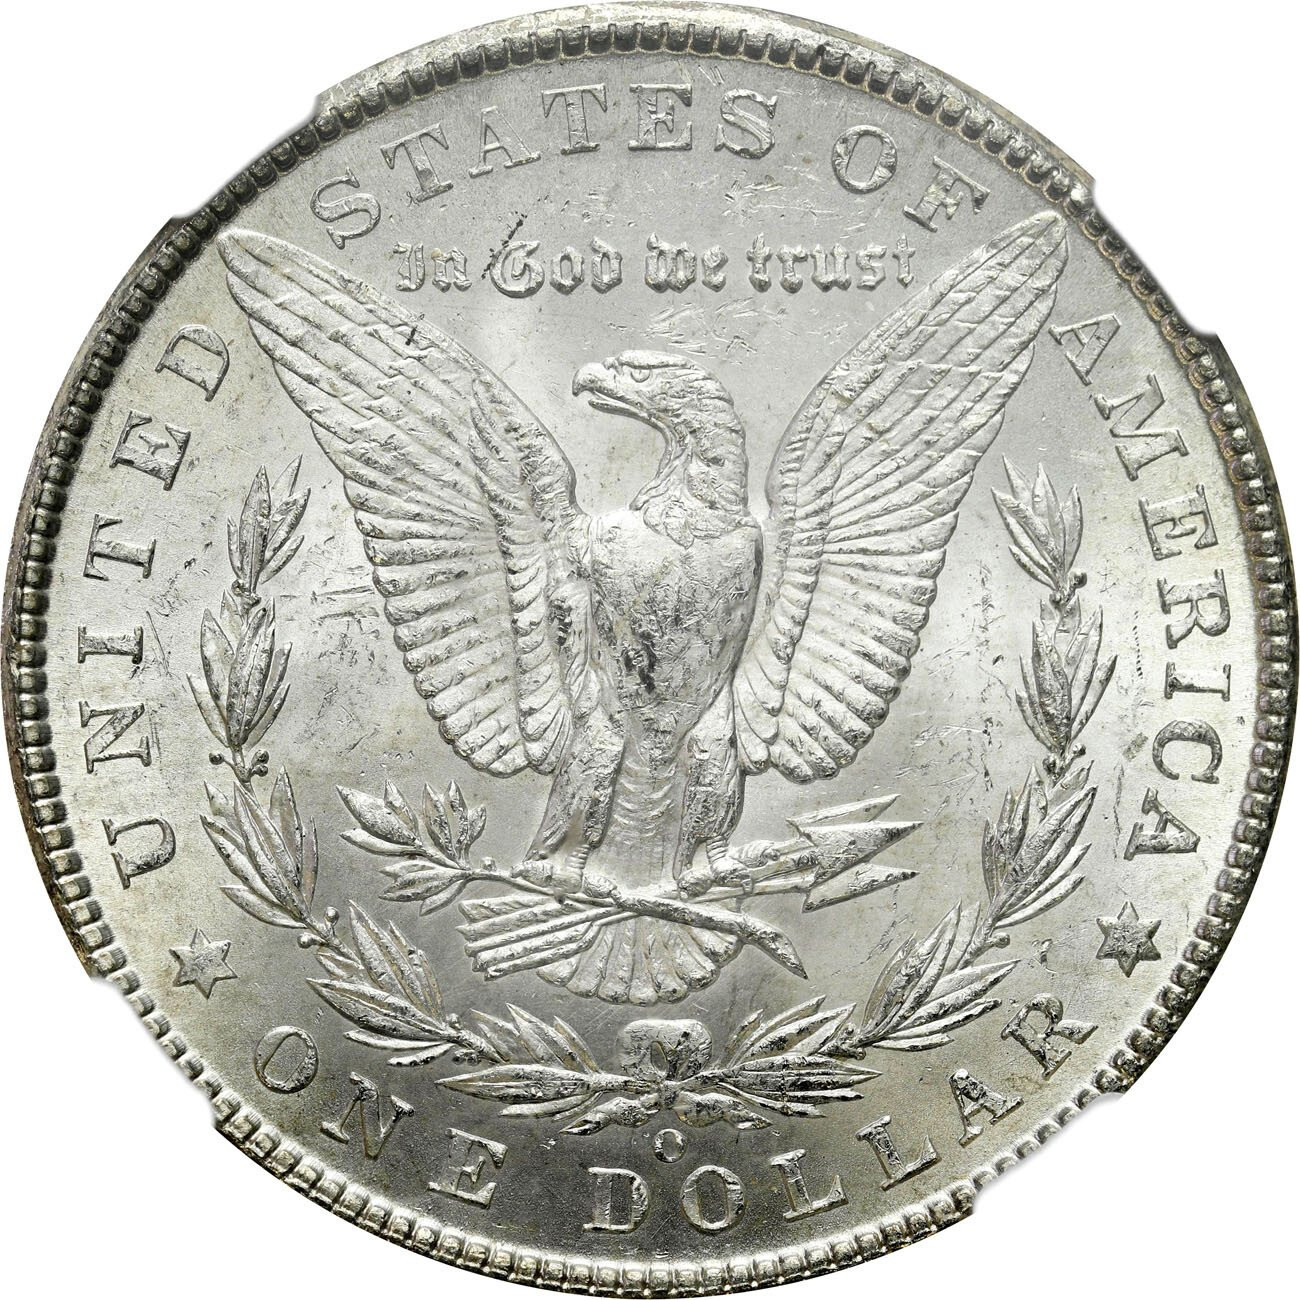 USA. 1 Dolar 1902 O, Nowy Orlean NGC MS63 - PIĘKNY